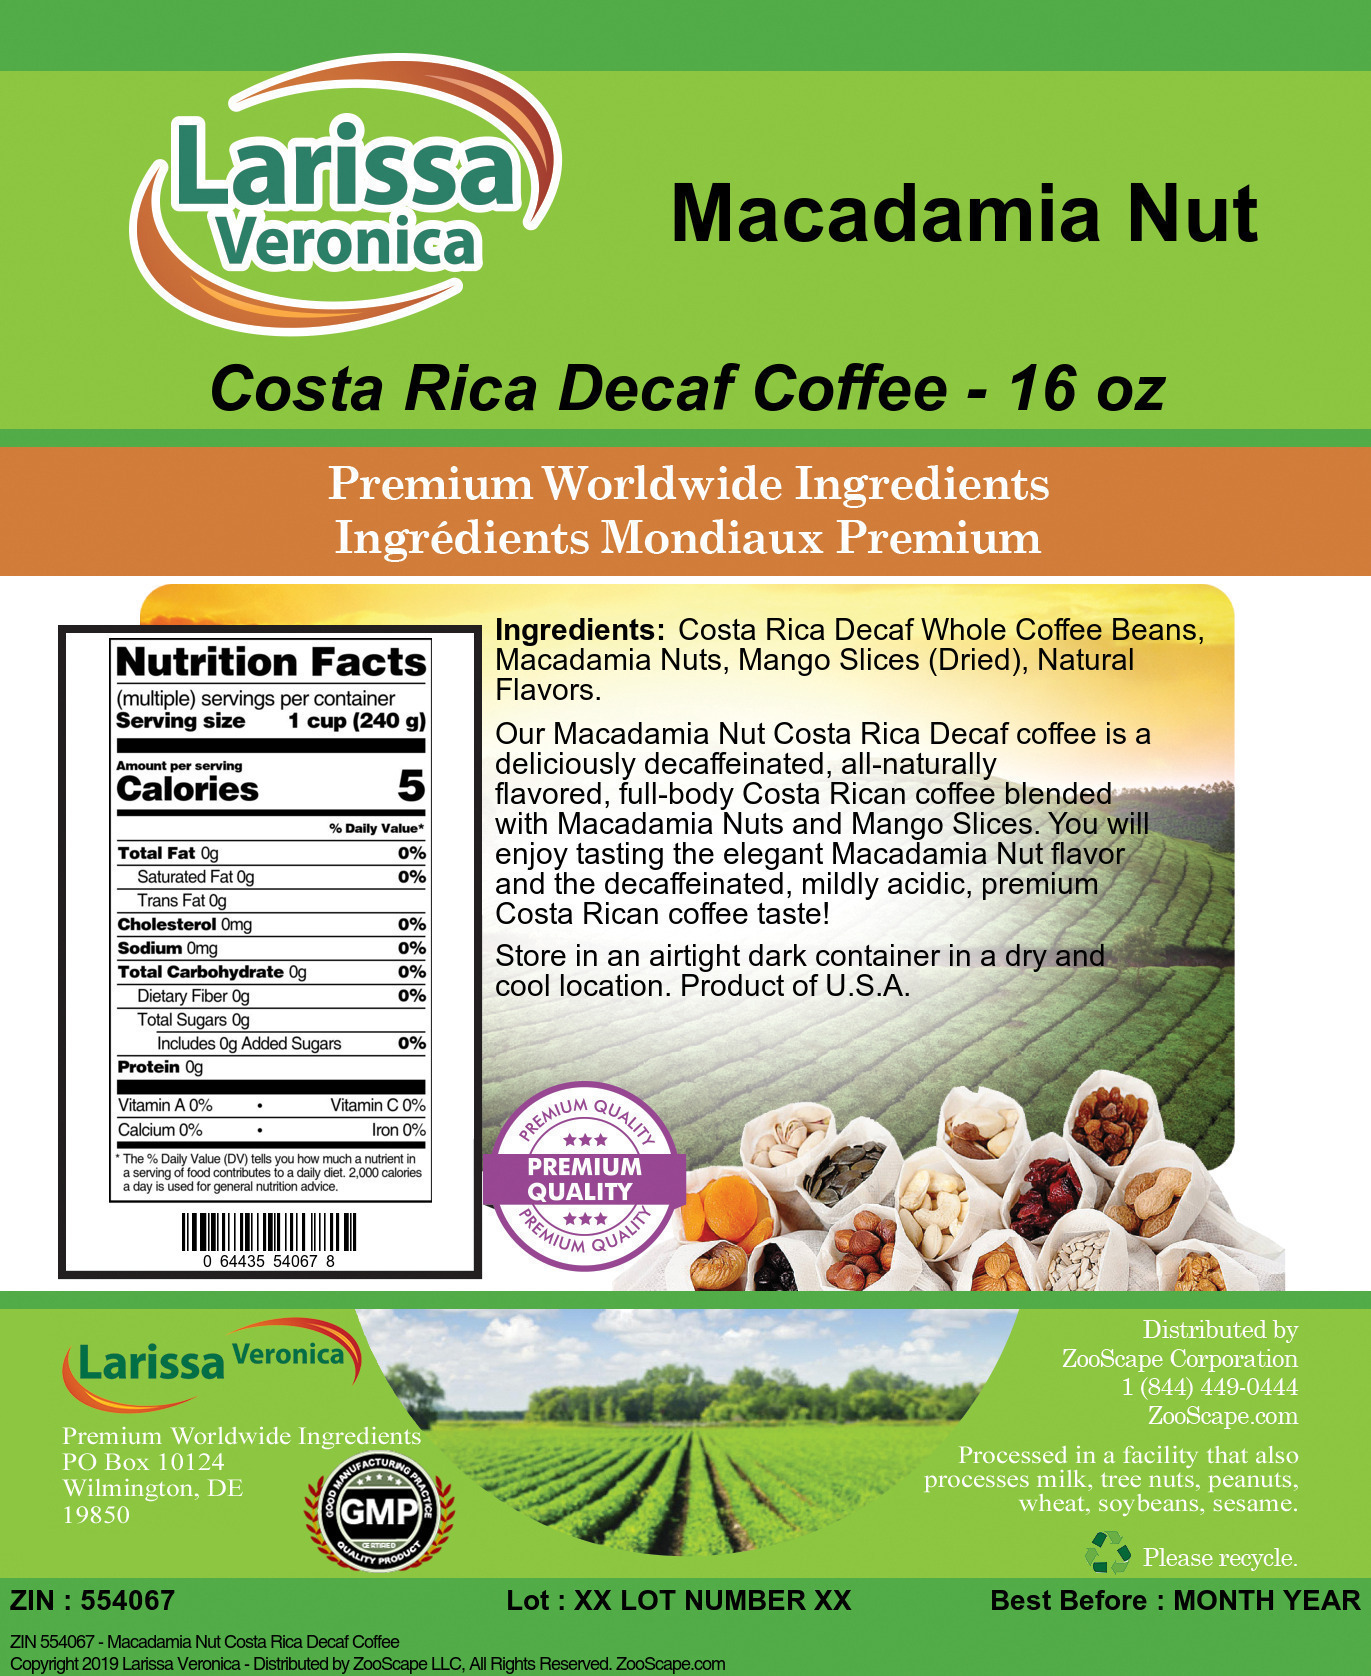 Macadamia Nut Costa Rica Decaf Coffee - Label